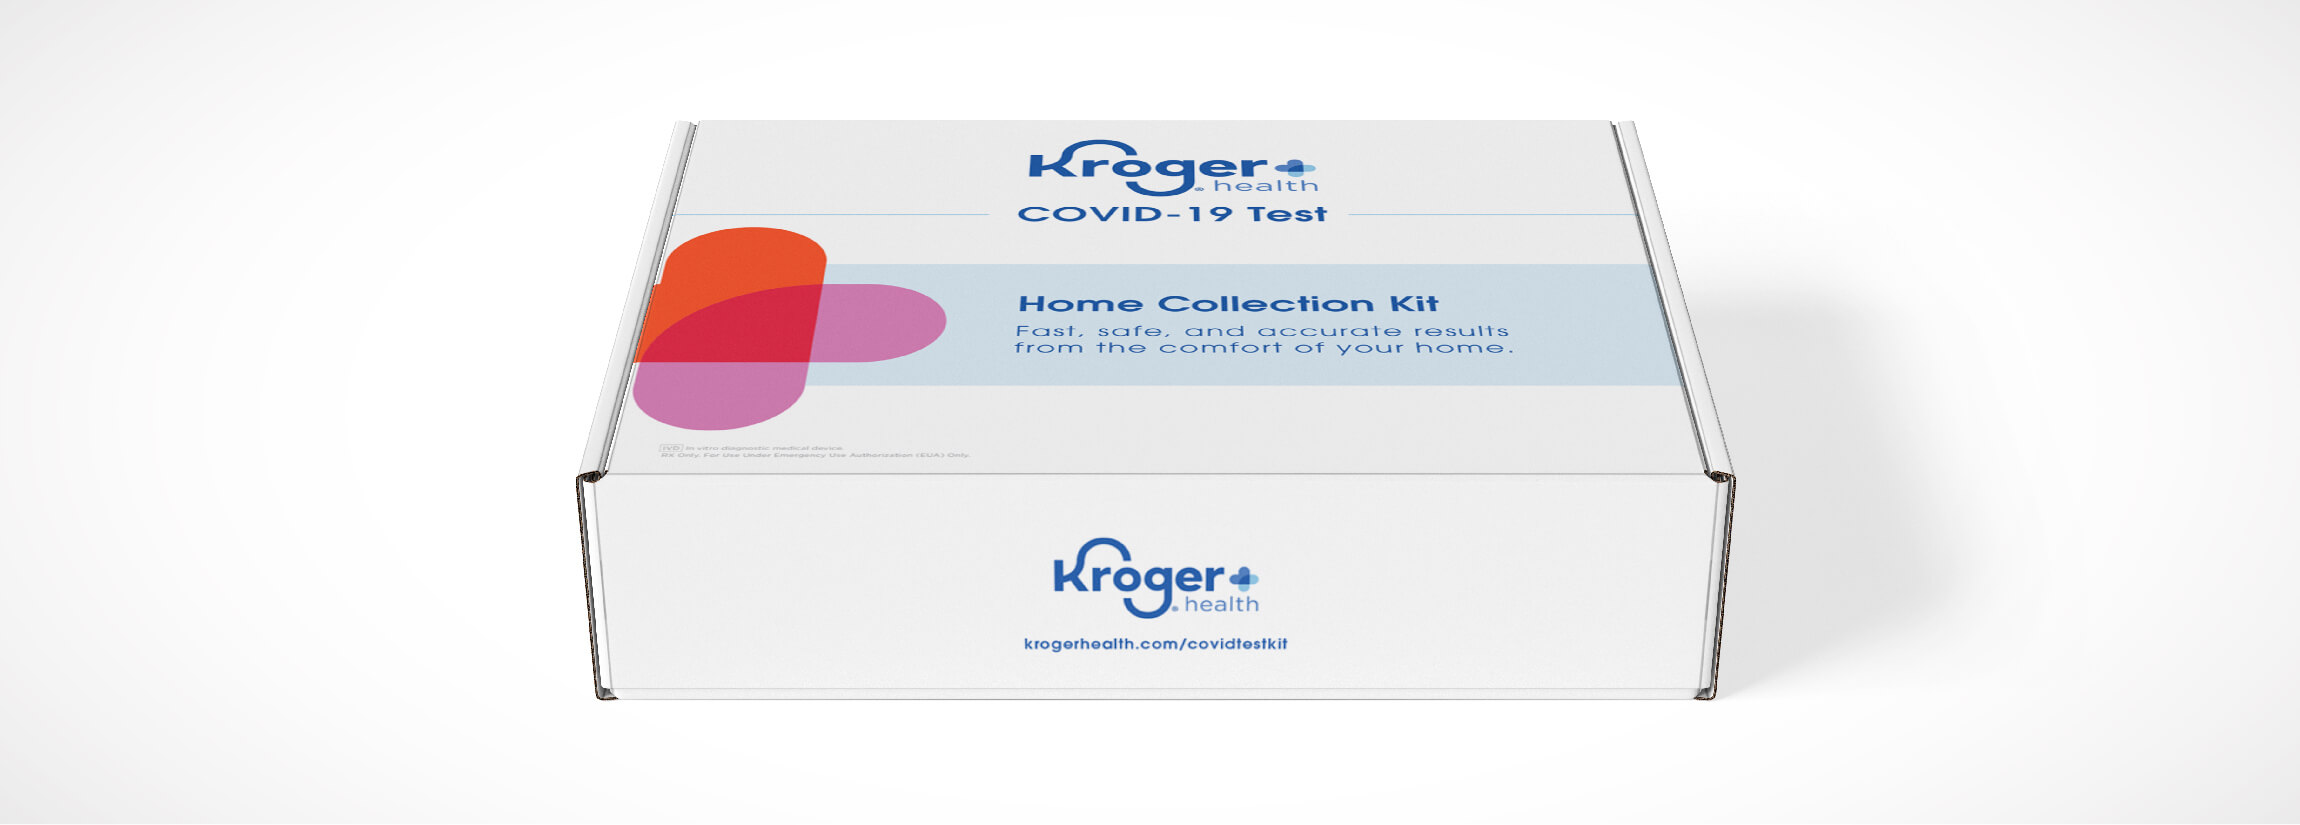 Kroger Health COVID-19 Test Kit packaging.